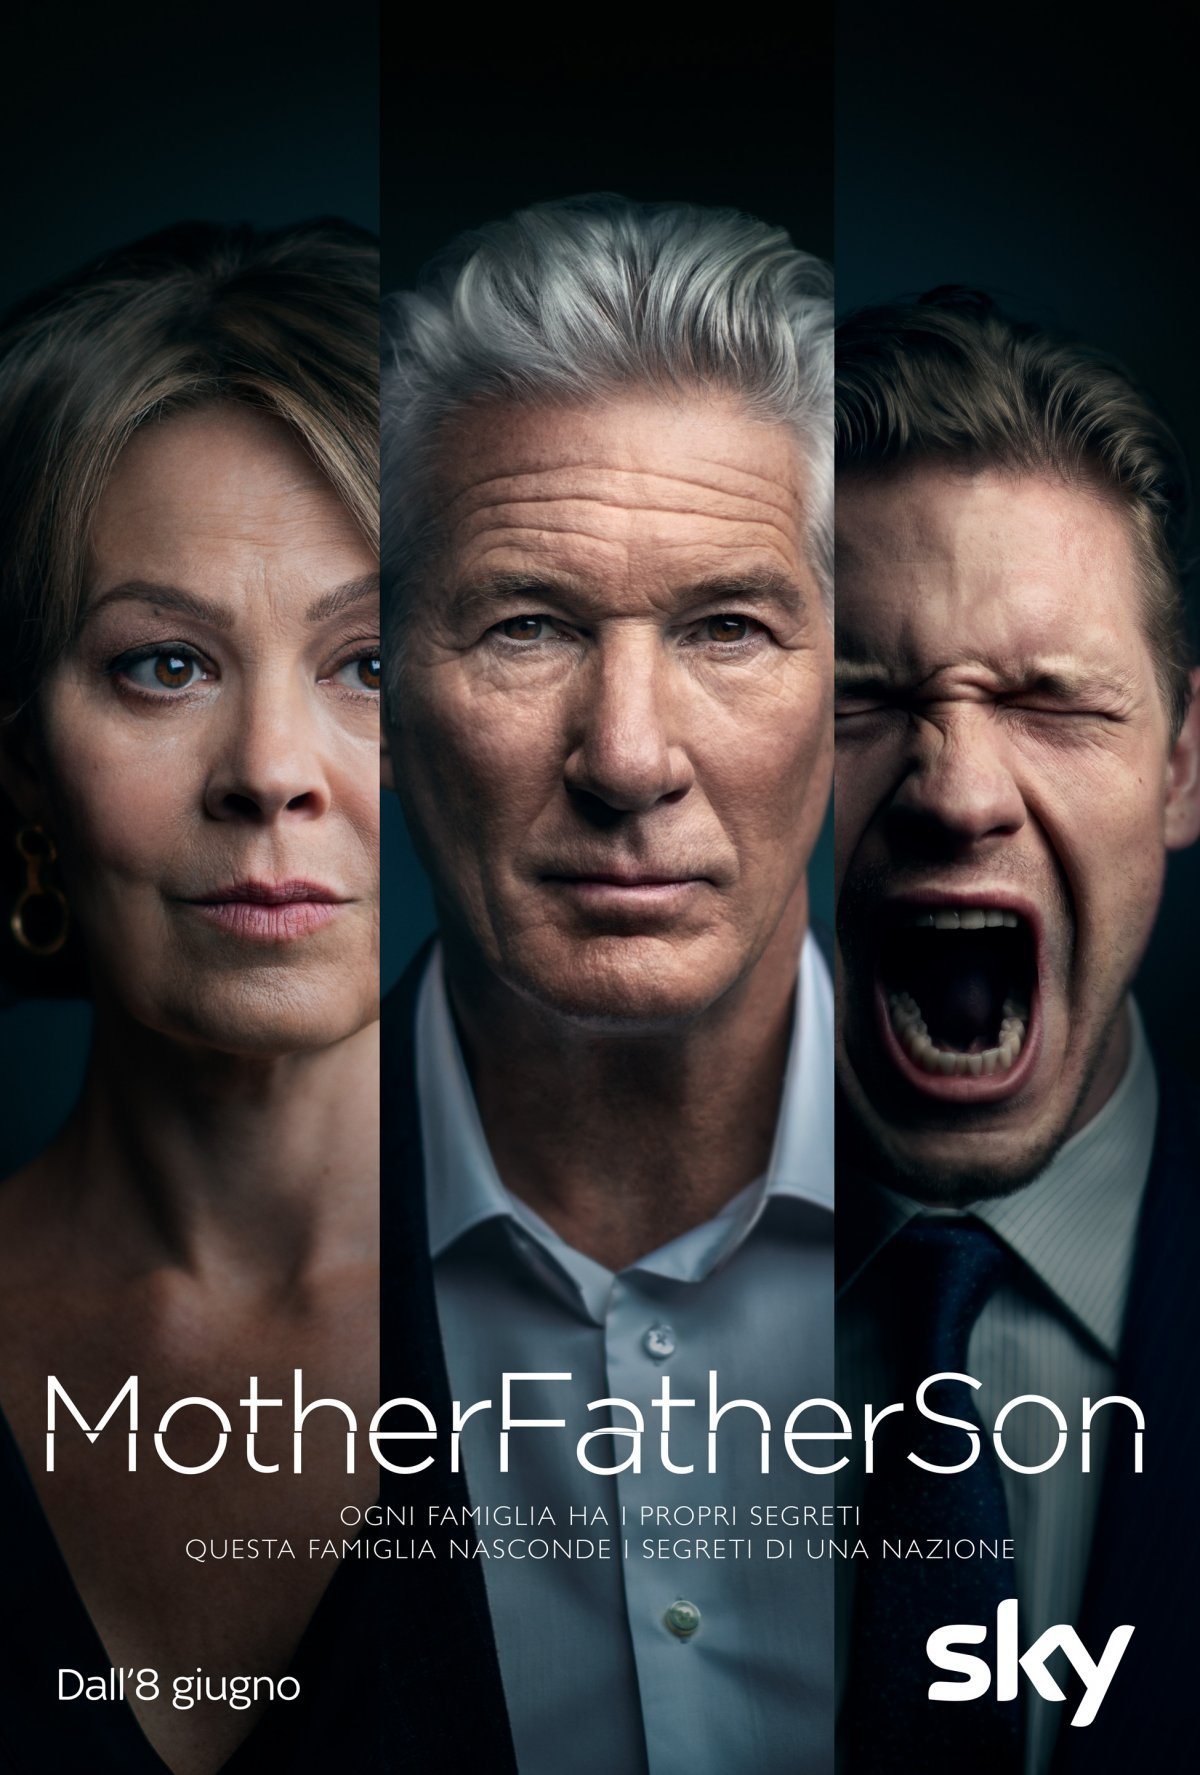 serie-tv-motherfatherson---immagini-motherfatherson-poster_jpg_1200x0_crop_q85.jpeg